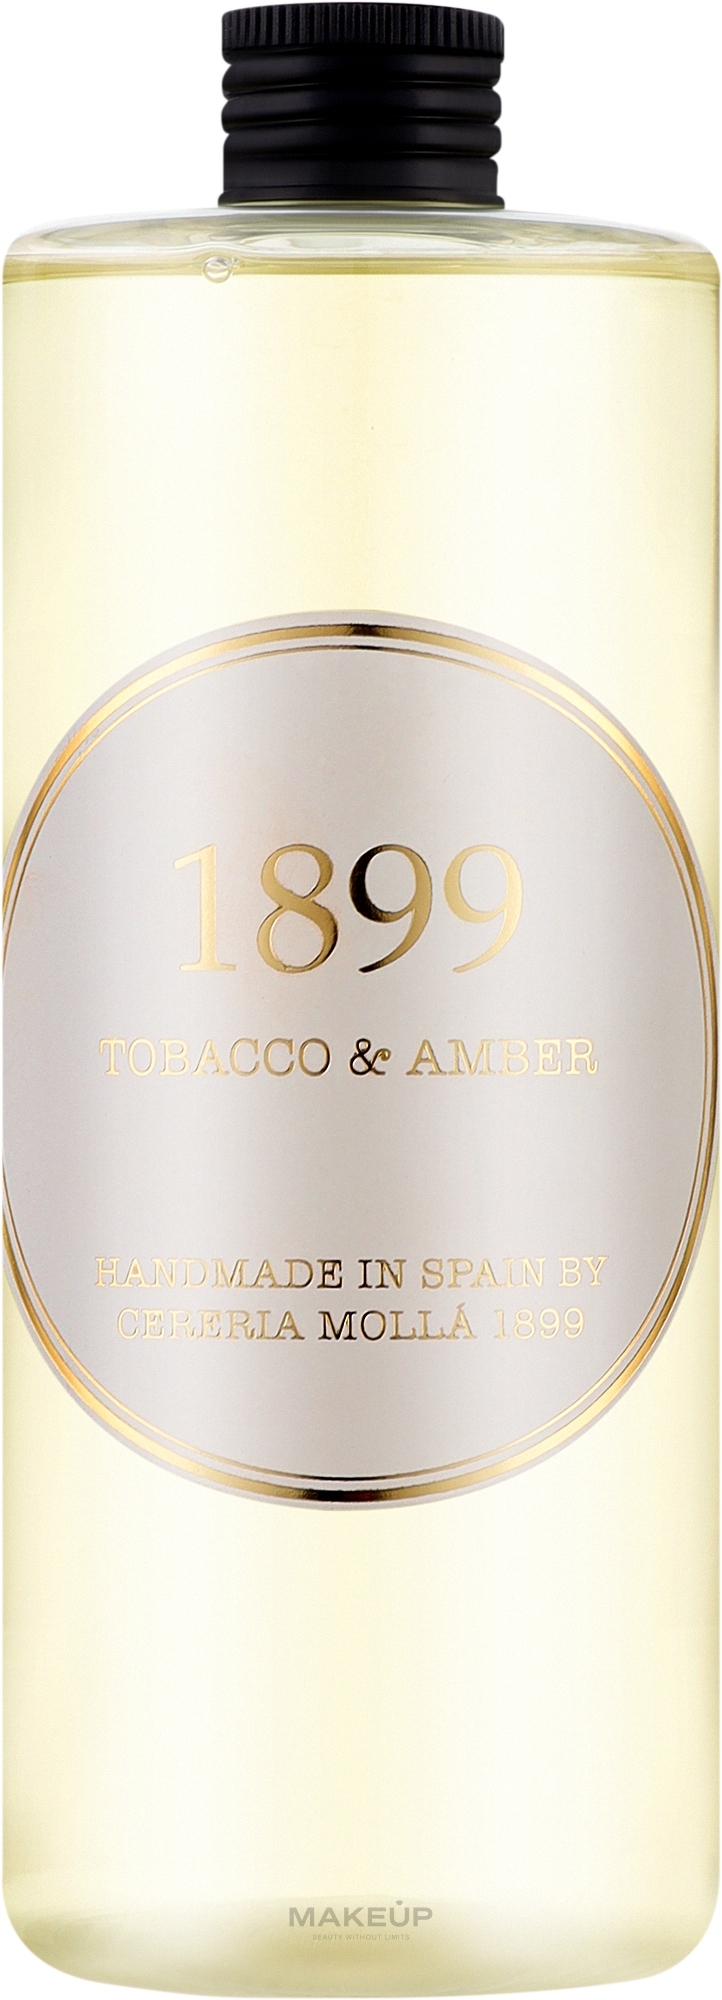 Наполнитель для аромадиффузора - Cereria Molla Tobacco & Amber — фото 500ml